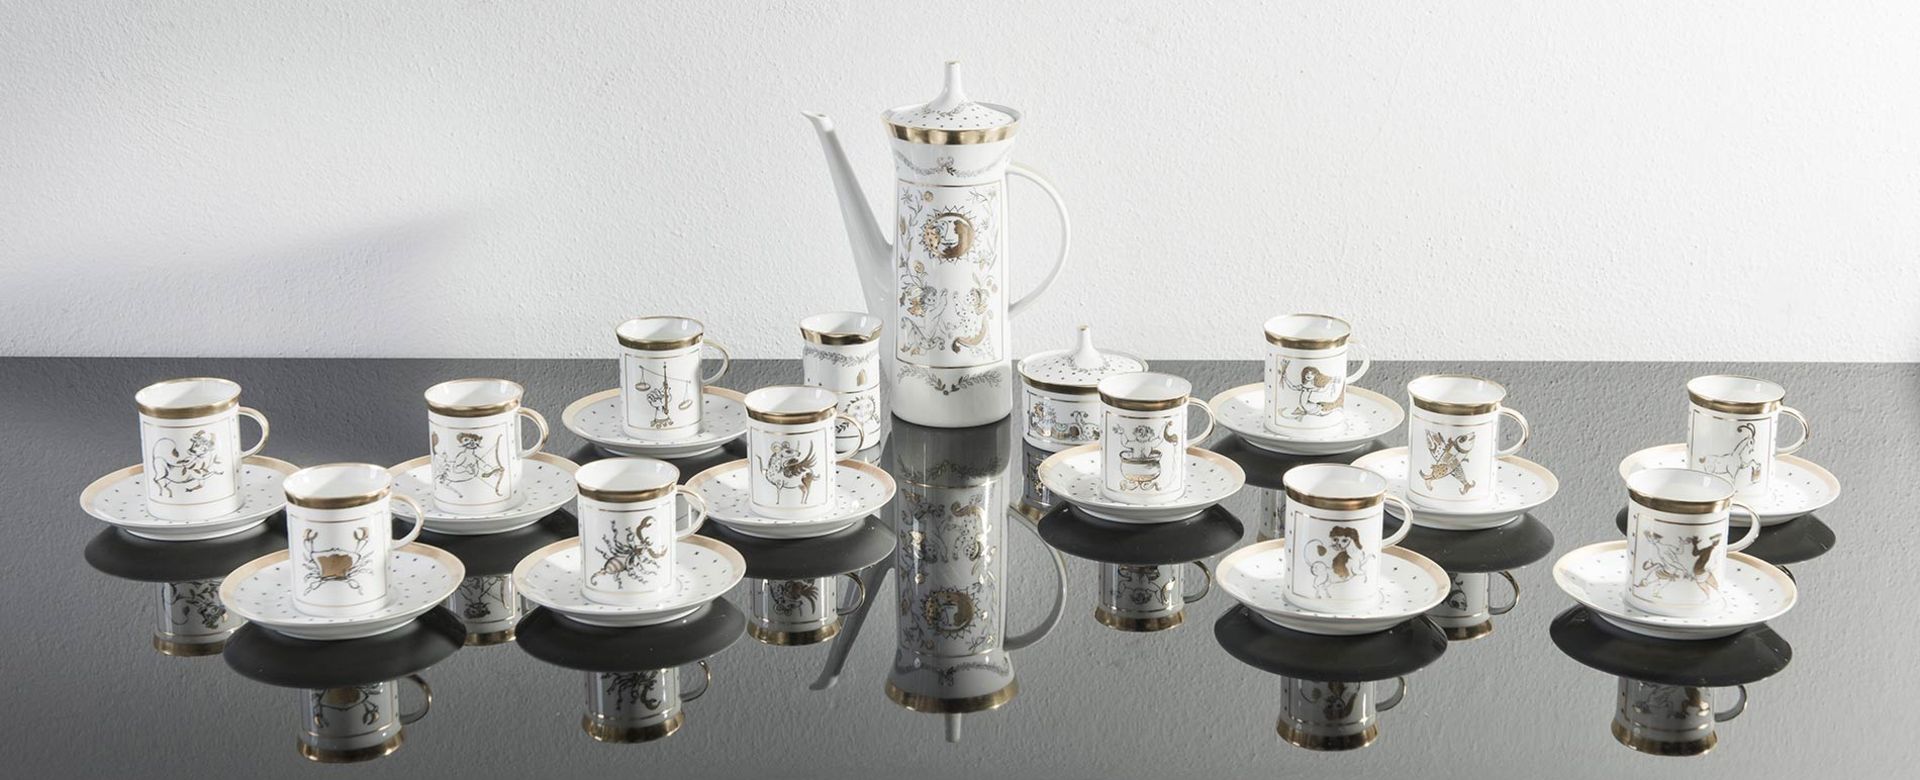 Rosenthal Studio Linie, Servizio da caffè da dodici persone in porcellana, Germania, XX secolo. - Bild 3 aus 9